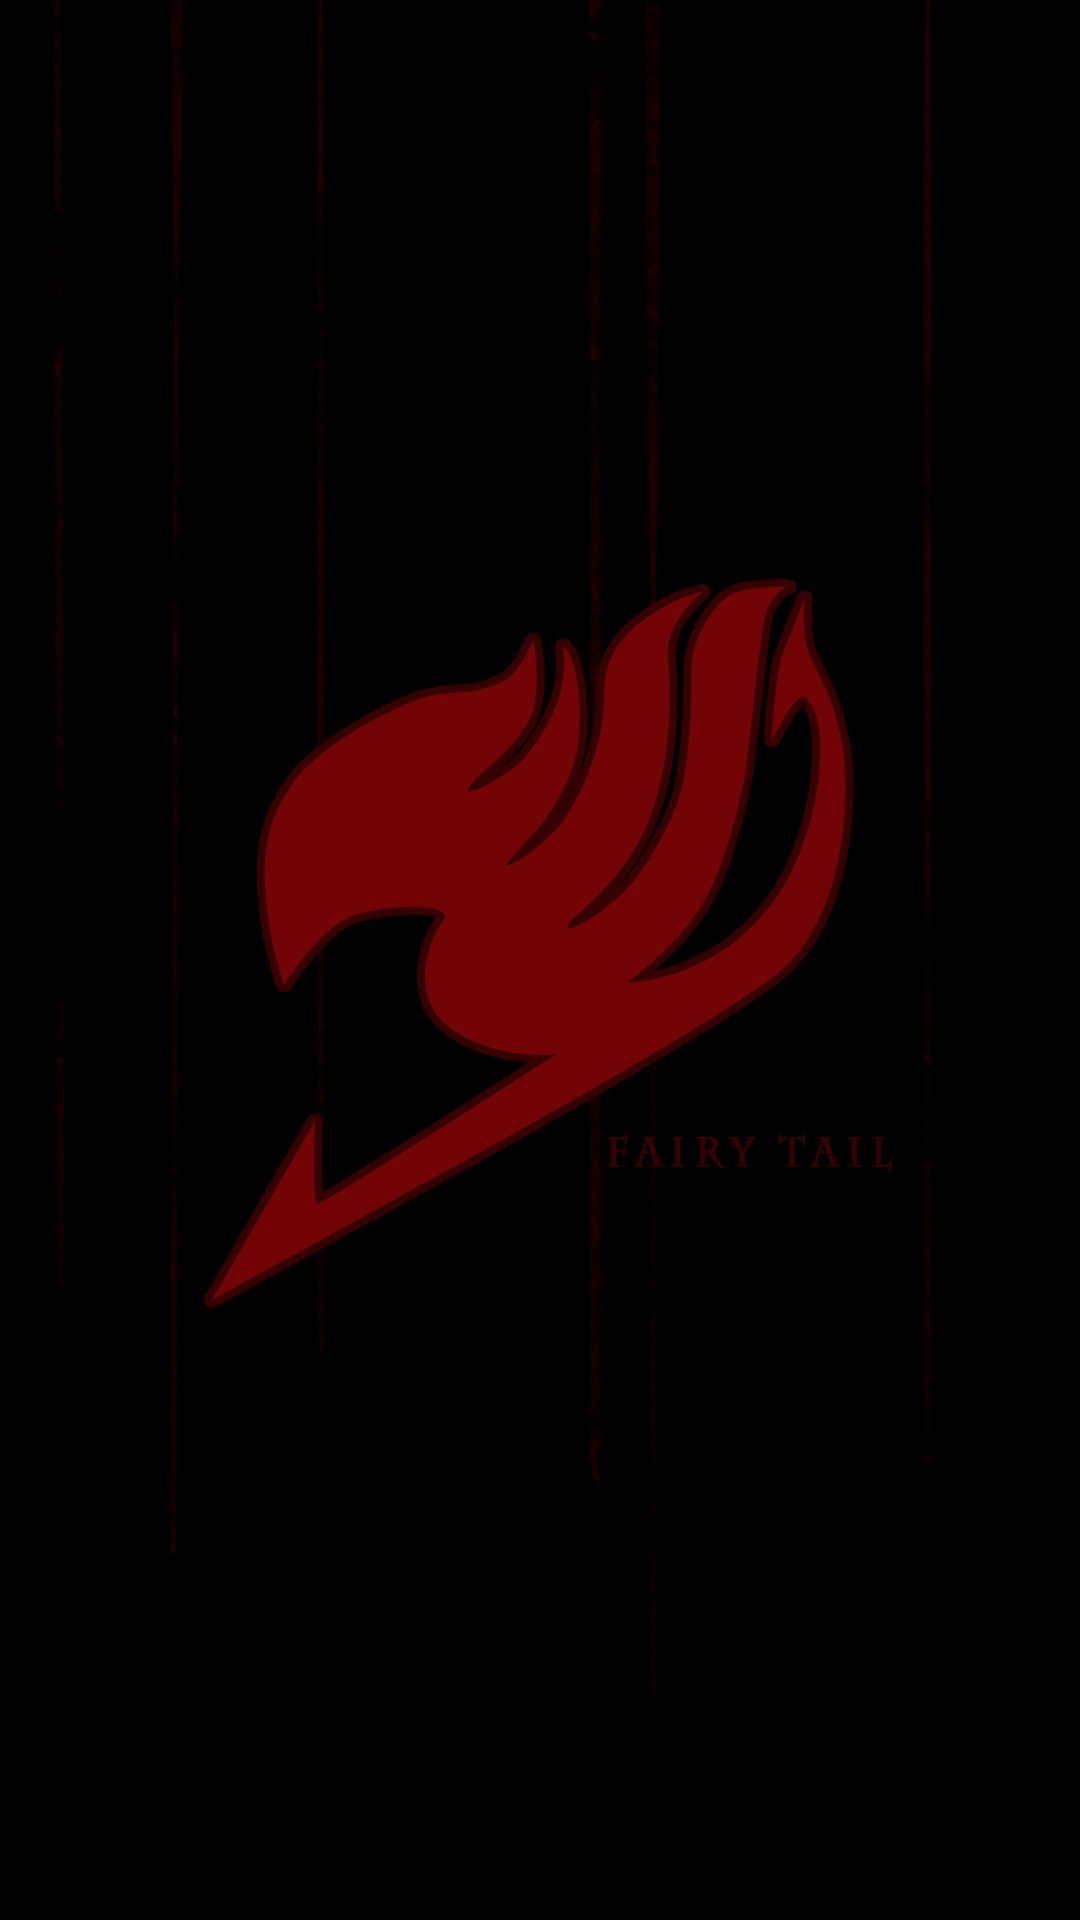 1080x1920 Fairy Tail Logo Wallpaper Full HD Cinema Wallpaper 1080p